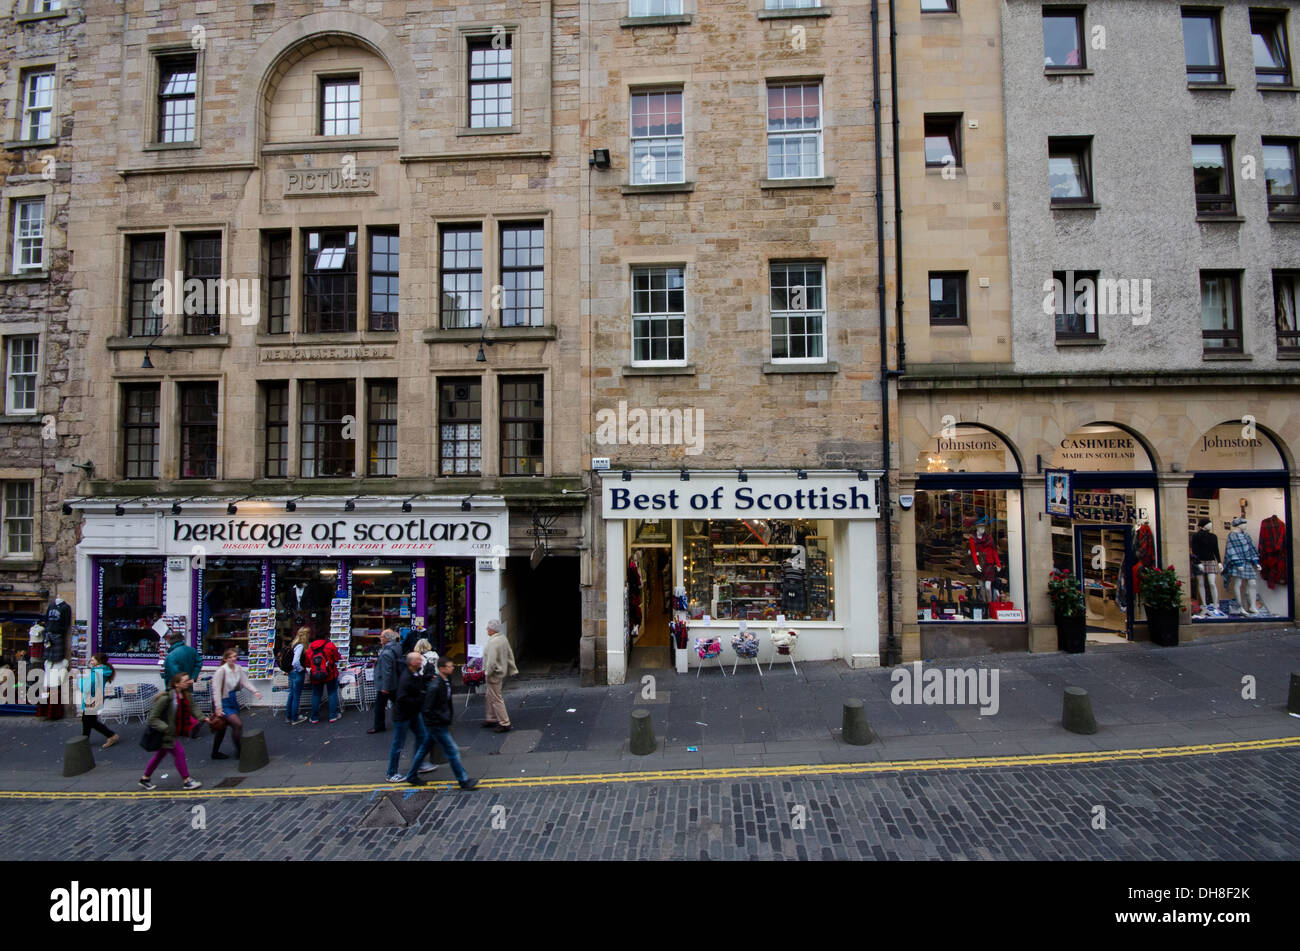 Best Shops To Visit In Edinburgh - Best Design Idea